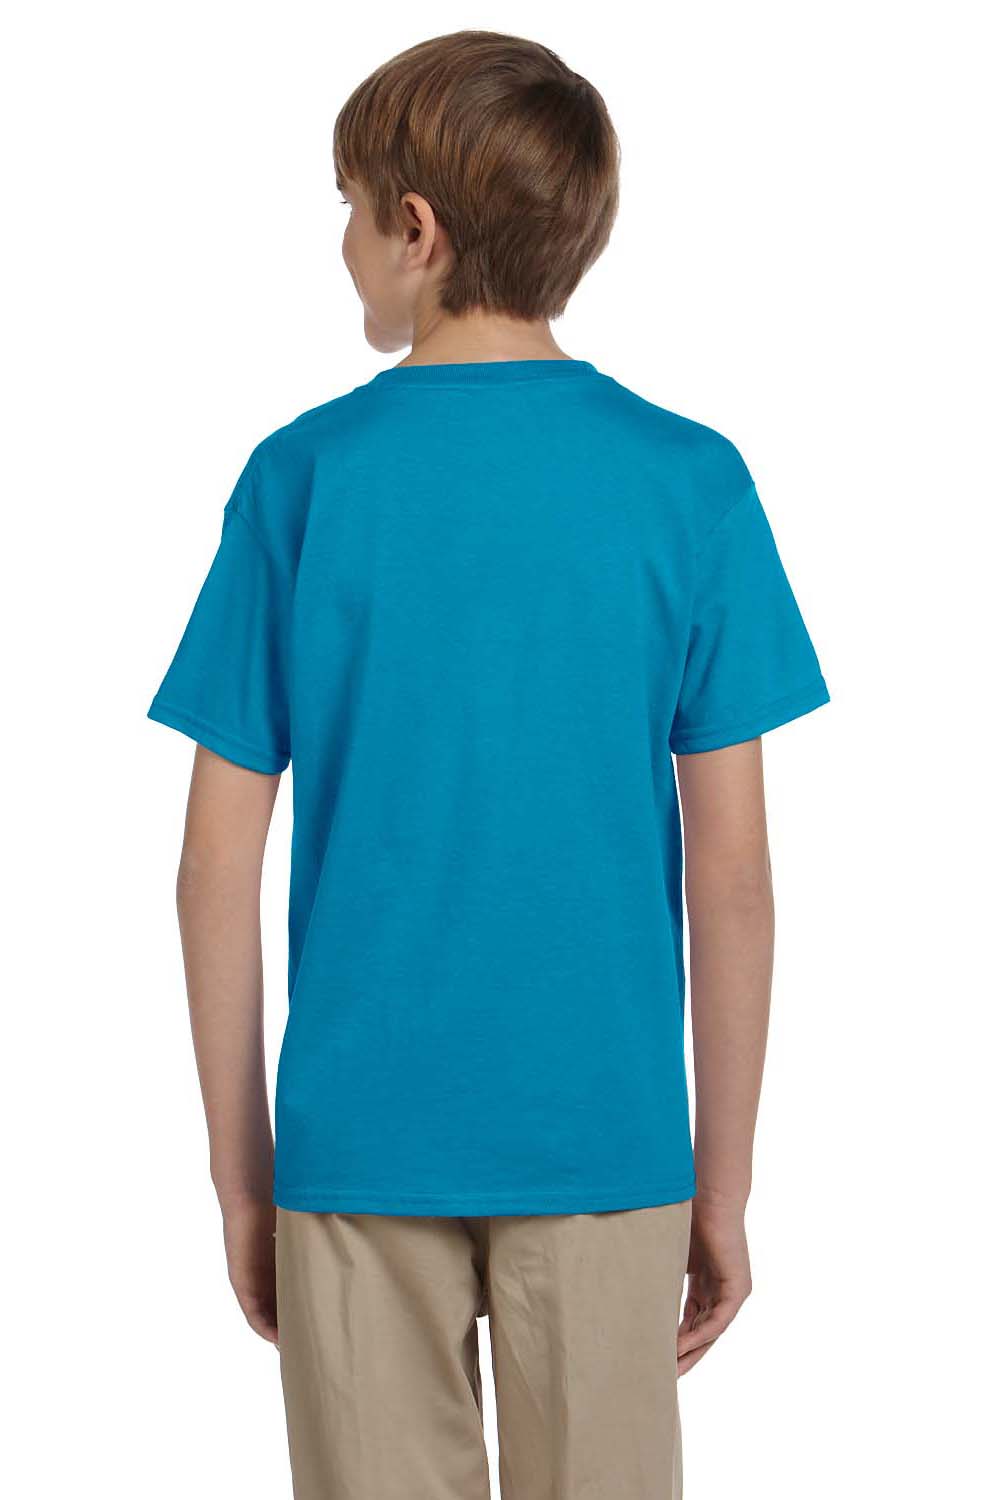 Hanes 5370 Youth EcoSmart Short Sleeve Crewneck T-Shirt Teal Blue Back